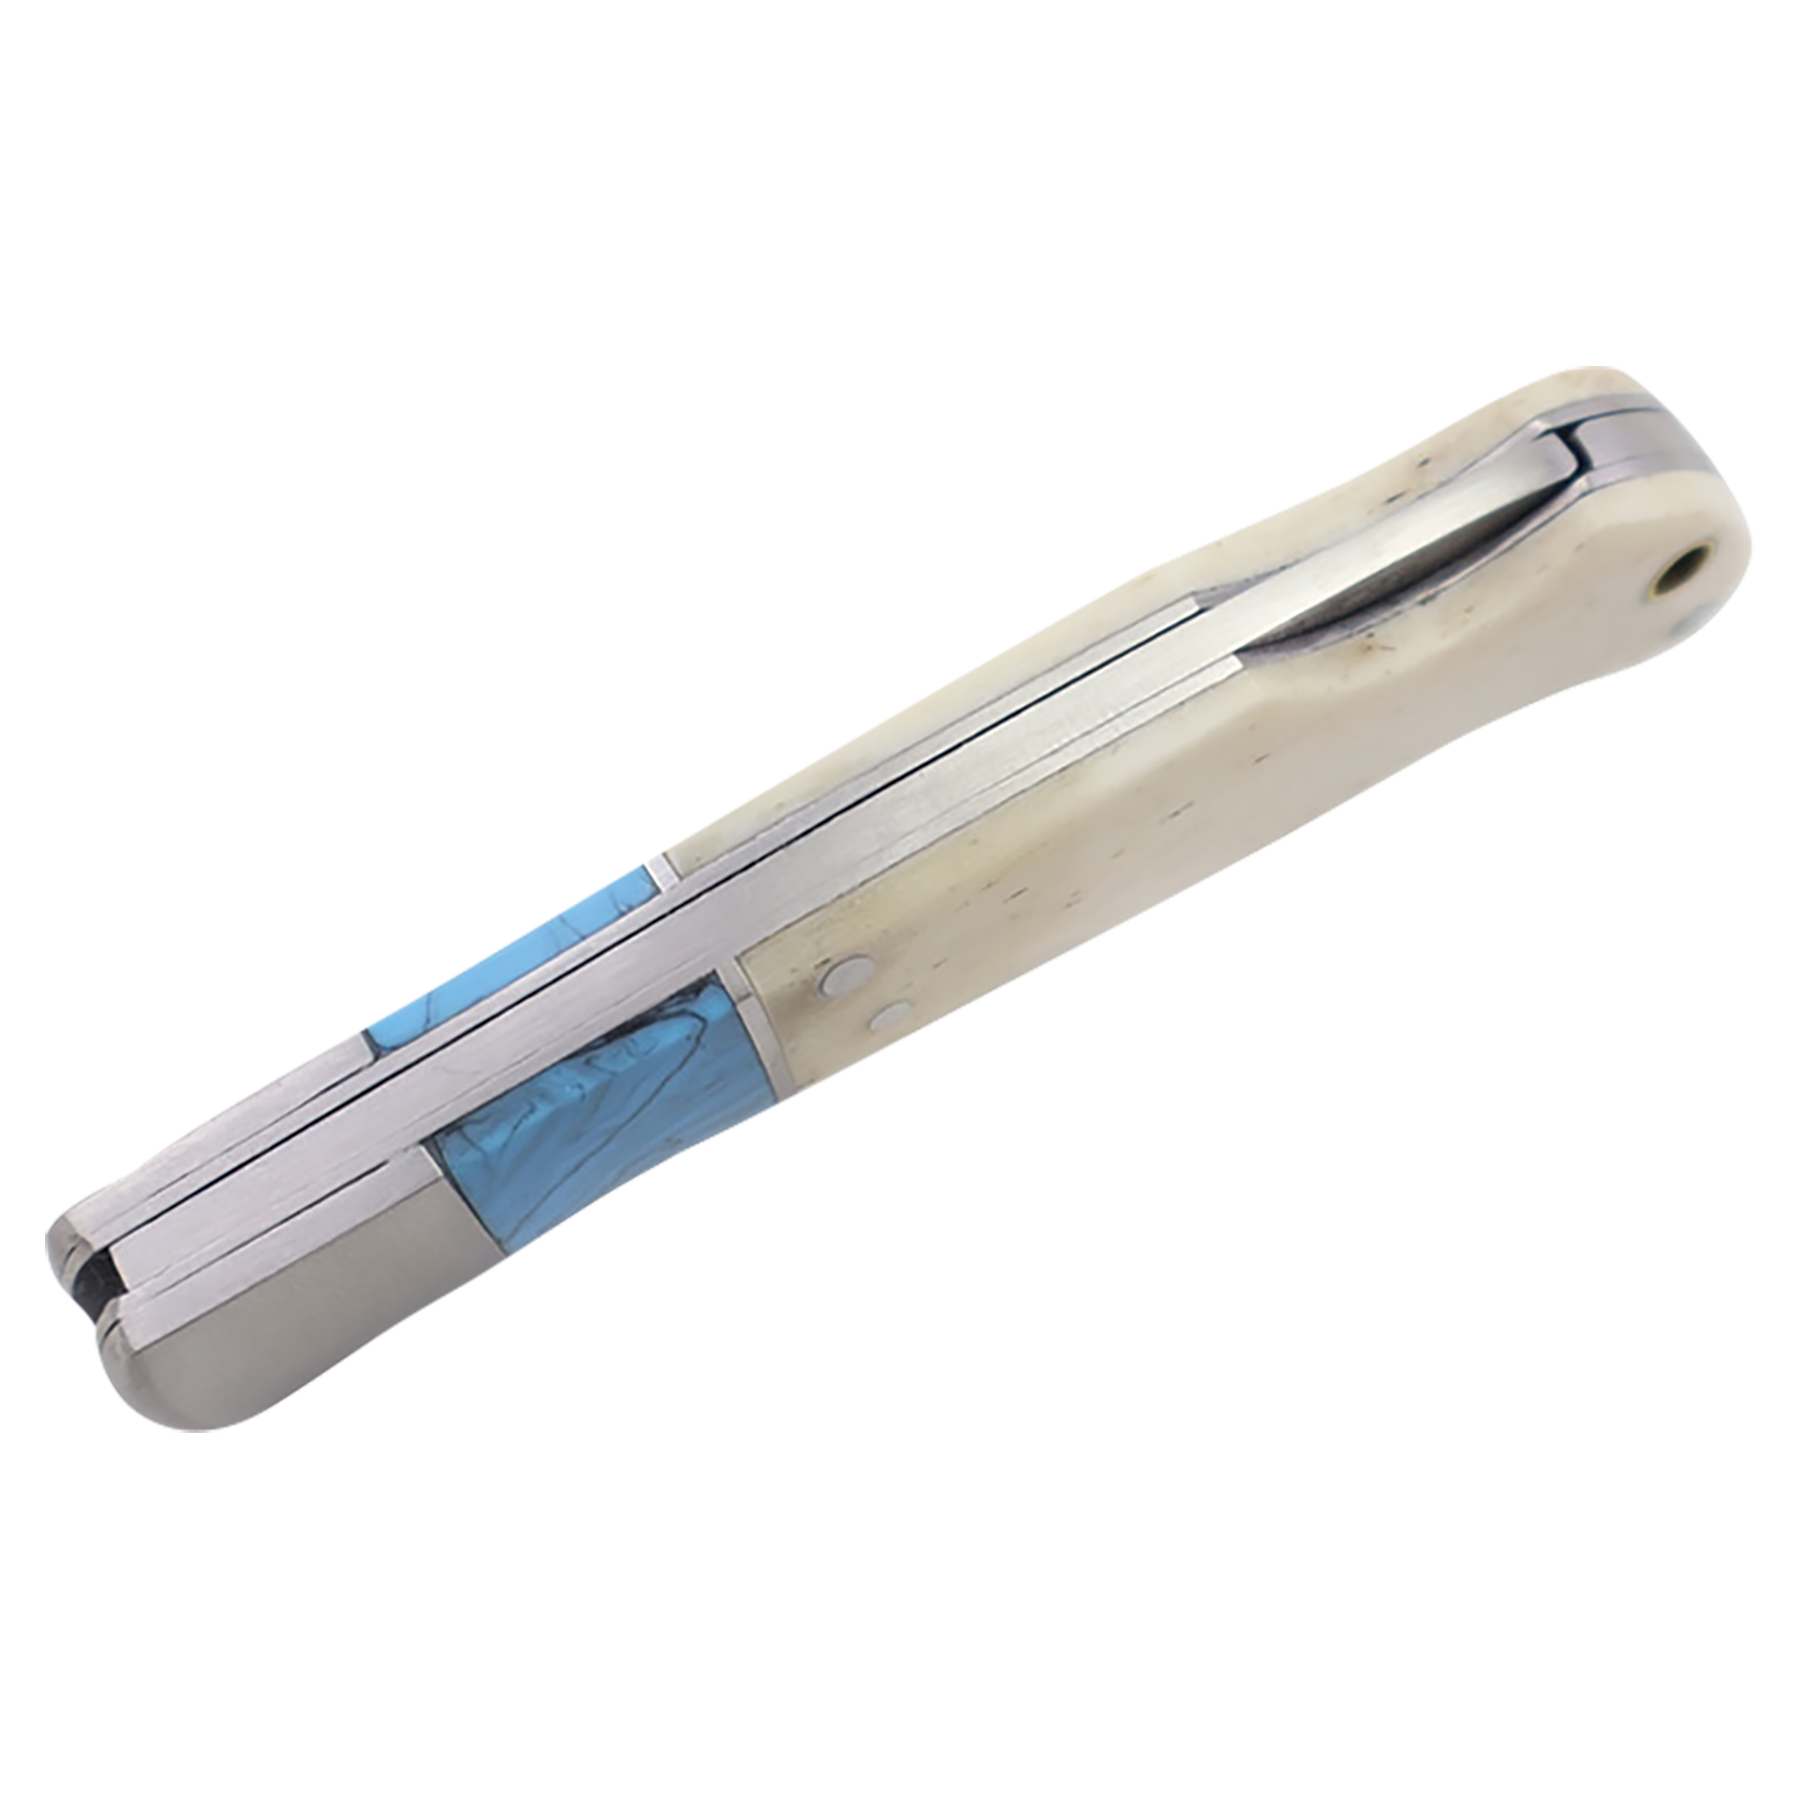 BISON RIVER  4" Blue/Bone Folding Knife - Beacon Laser Creations LLC